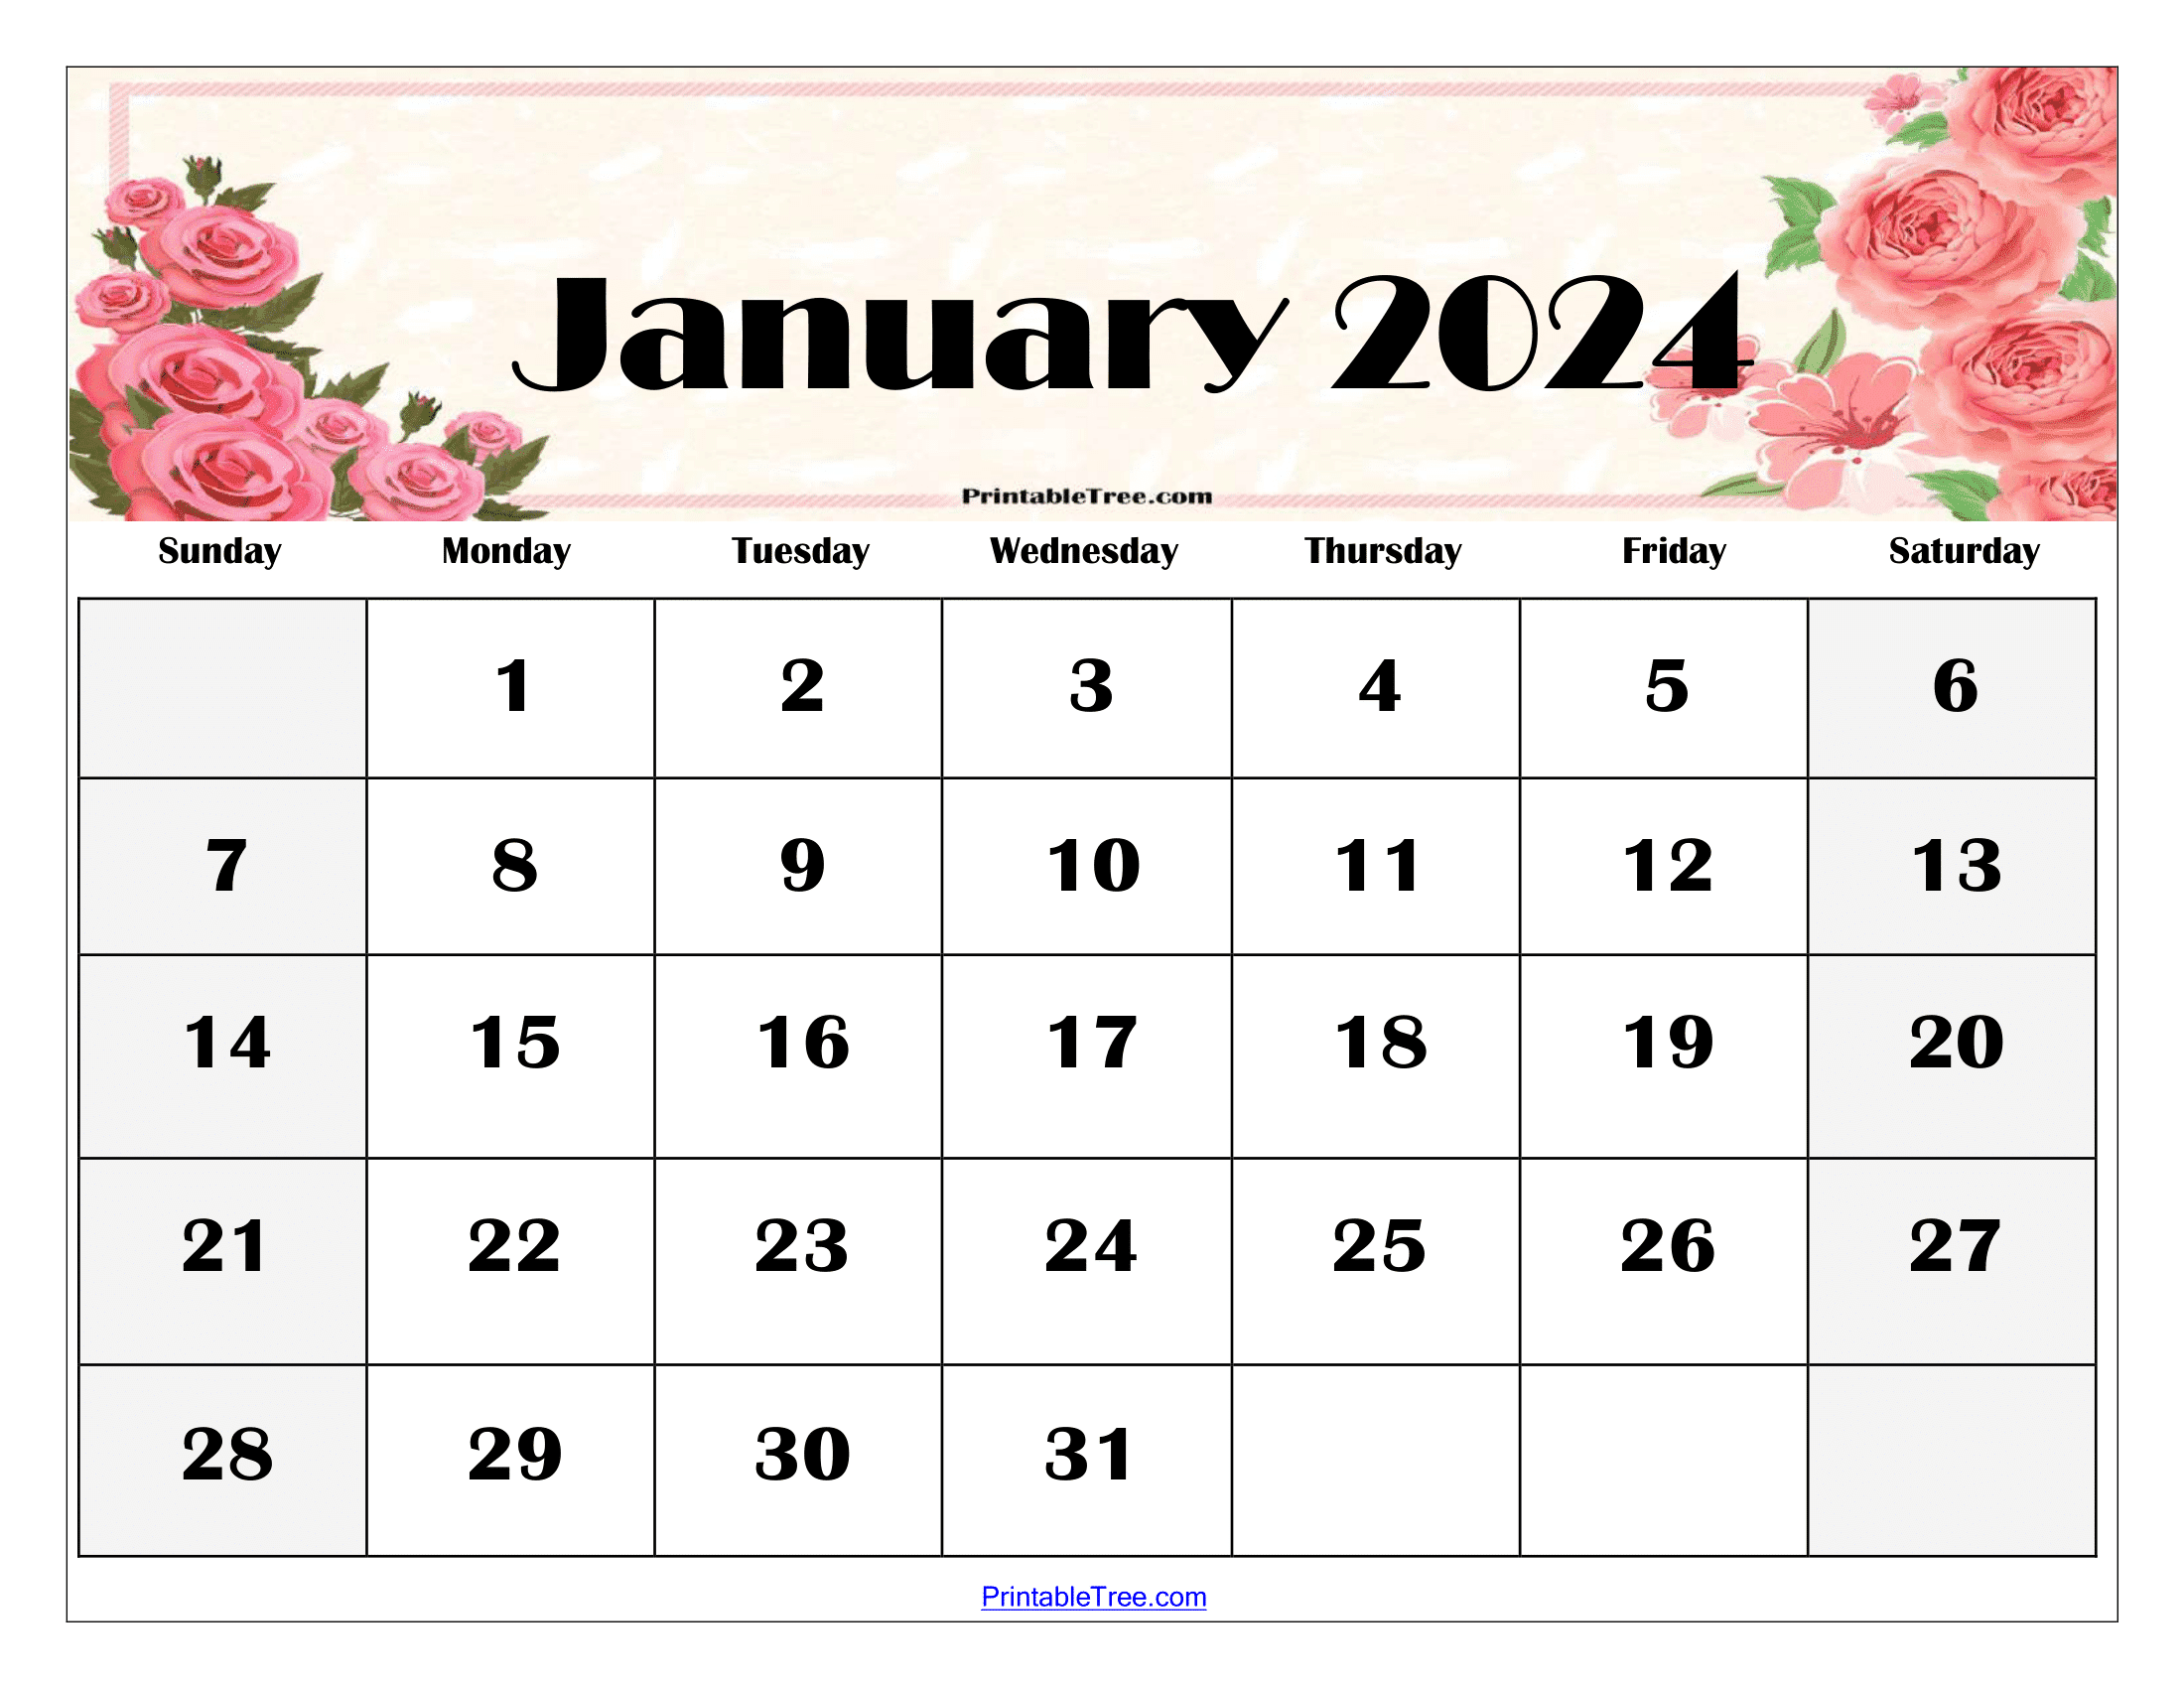 January 2024 Calendar Printable PDF Template With Holidays - Free Printable 2024 Calendar Floral